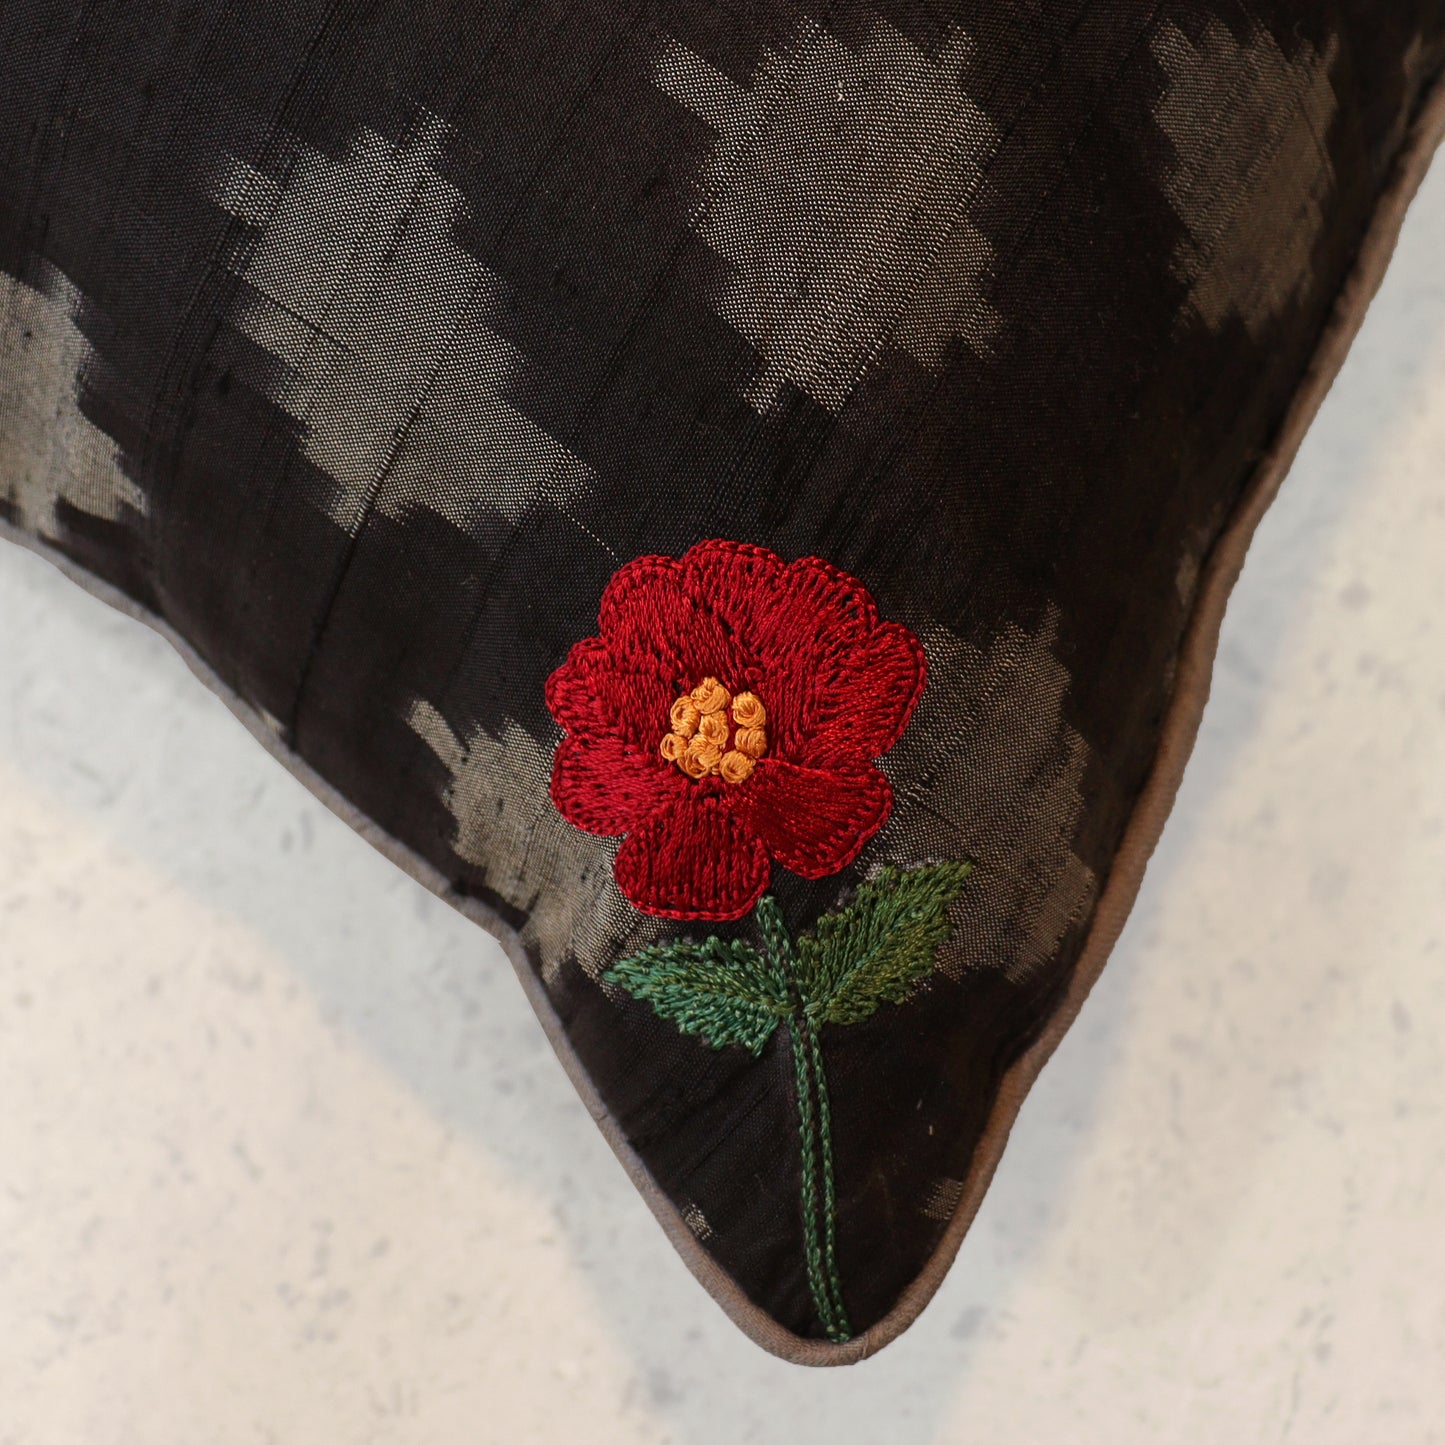 Embroidered Rose Ikat Silk Cushion